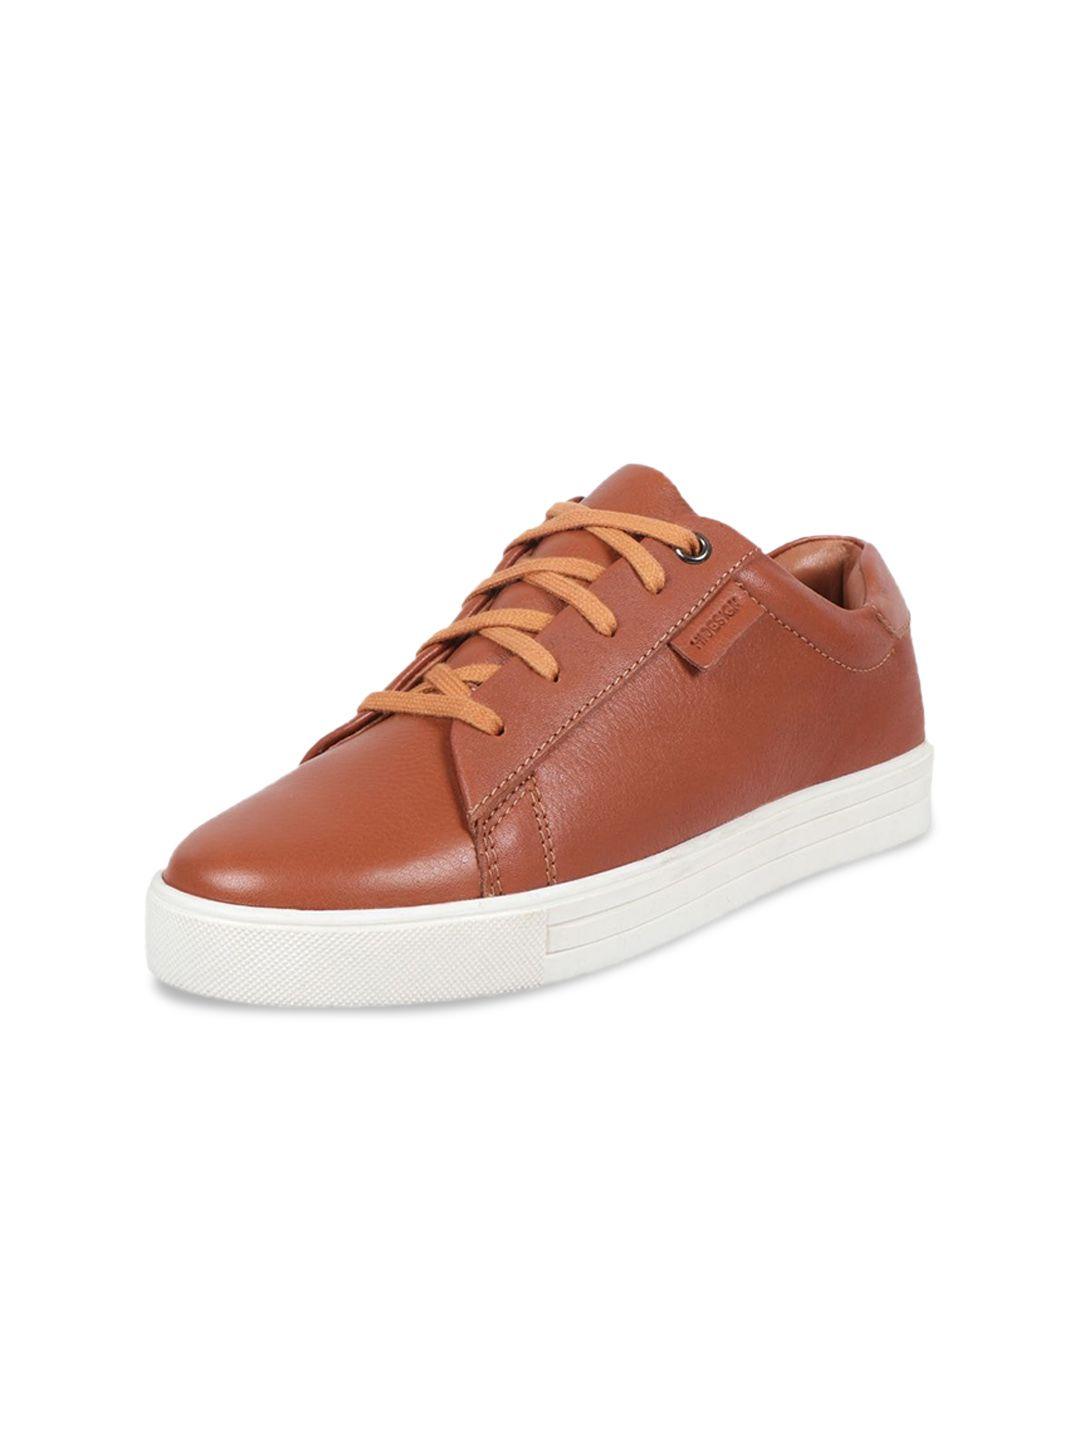 hidesign-women-kenya-leather-comfort-insole-contrast-sole-sneakers